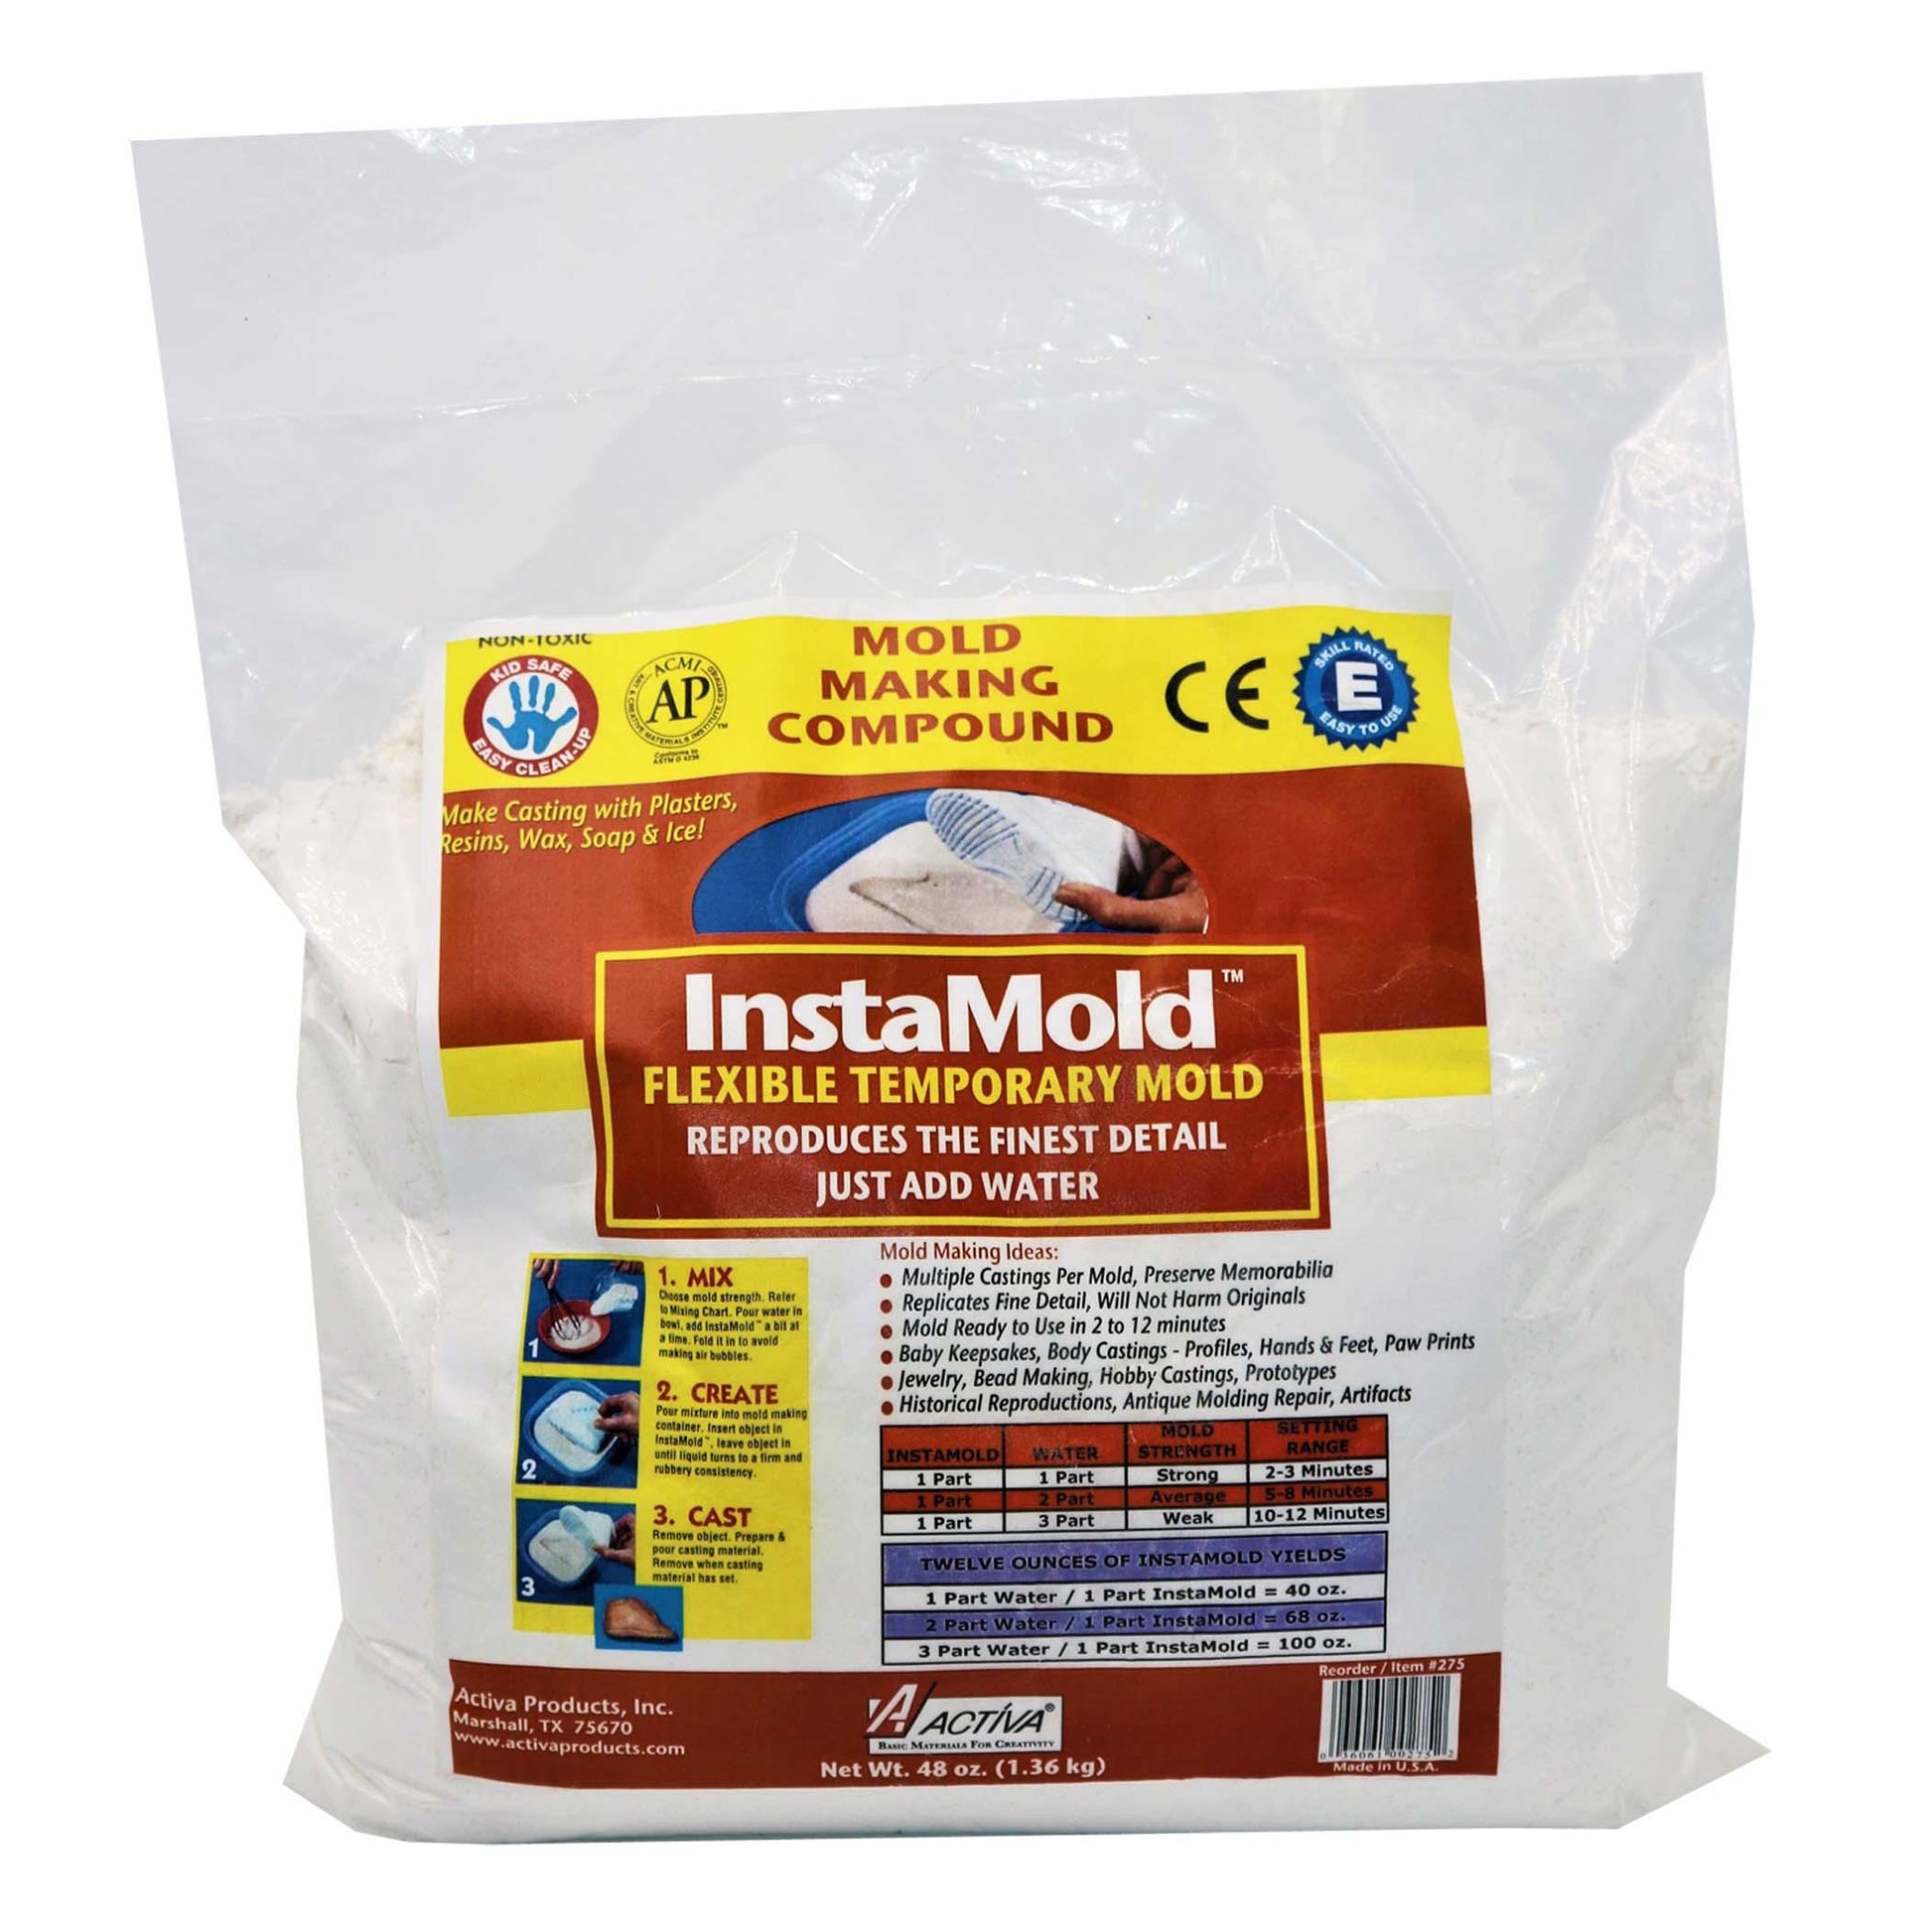 InstaMold™ Flexible Temporary Mold, 48 oz. - Loomini